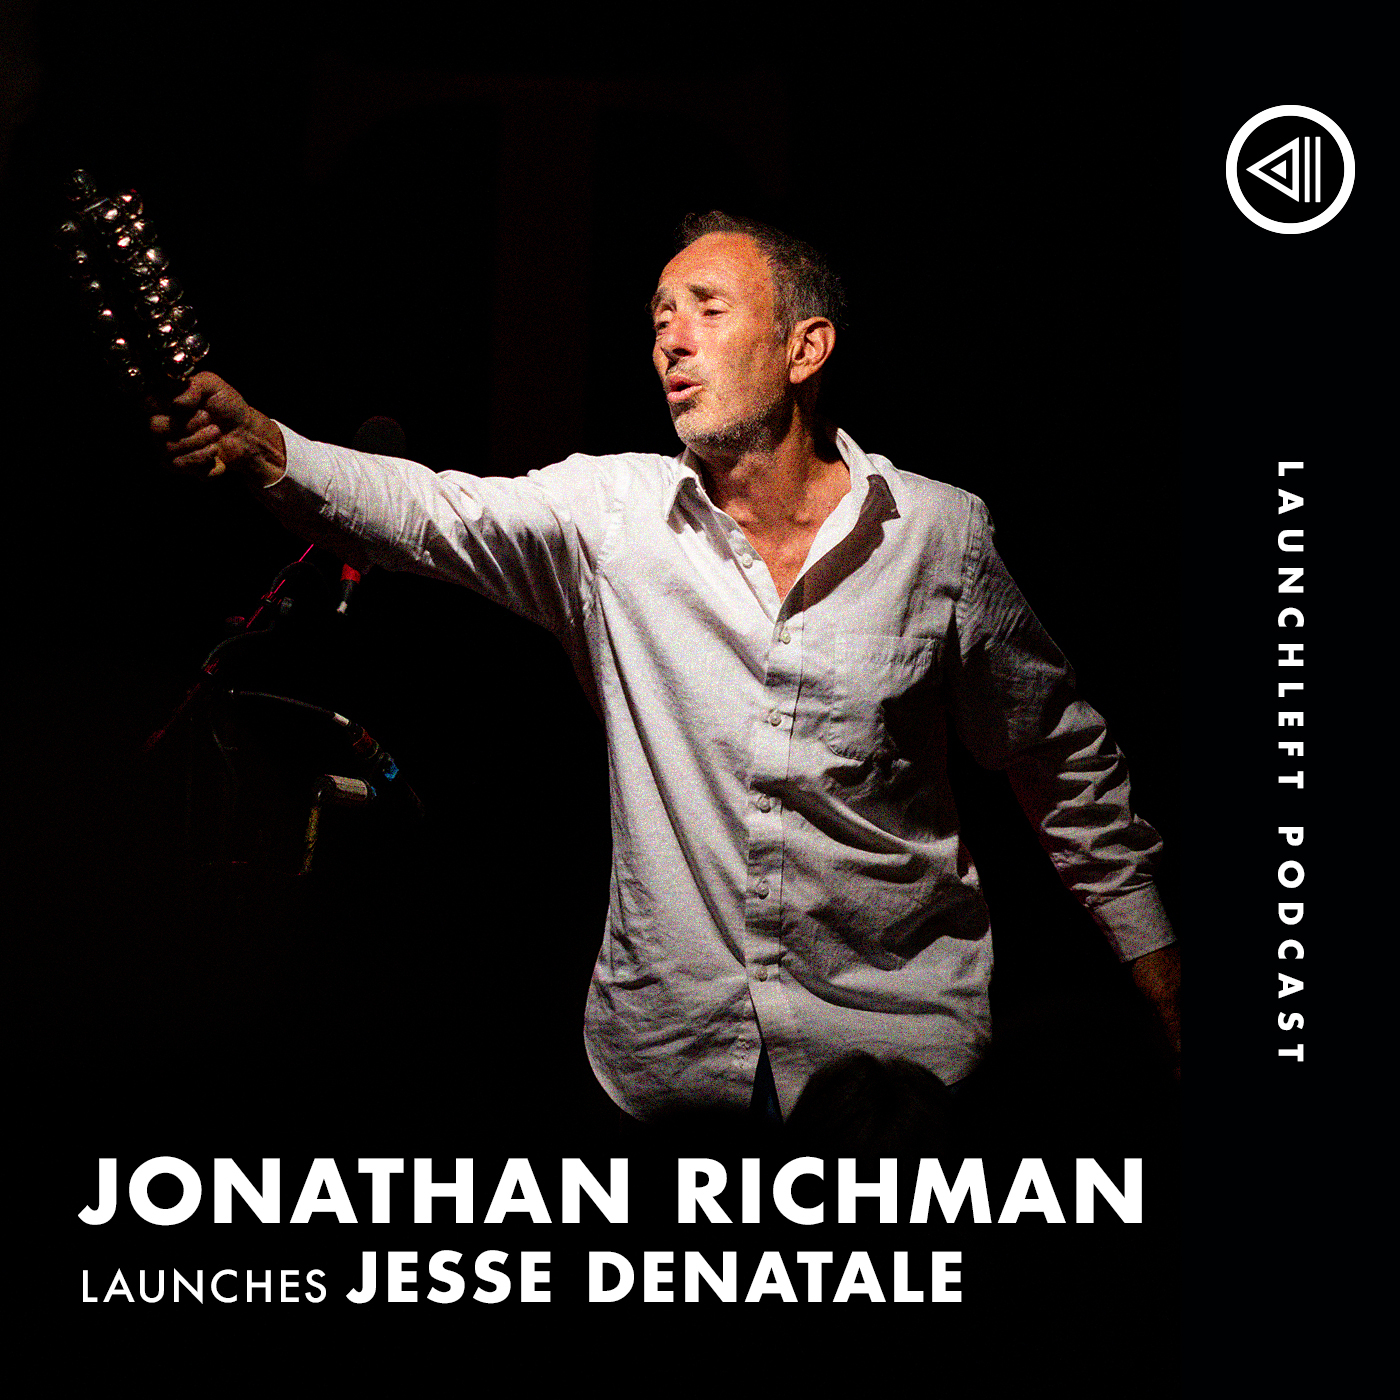 JONATHAN RICHMAN launches Jesse DeNatale